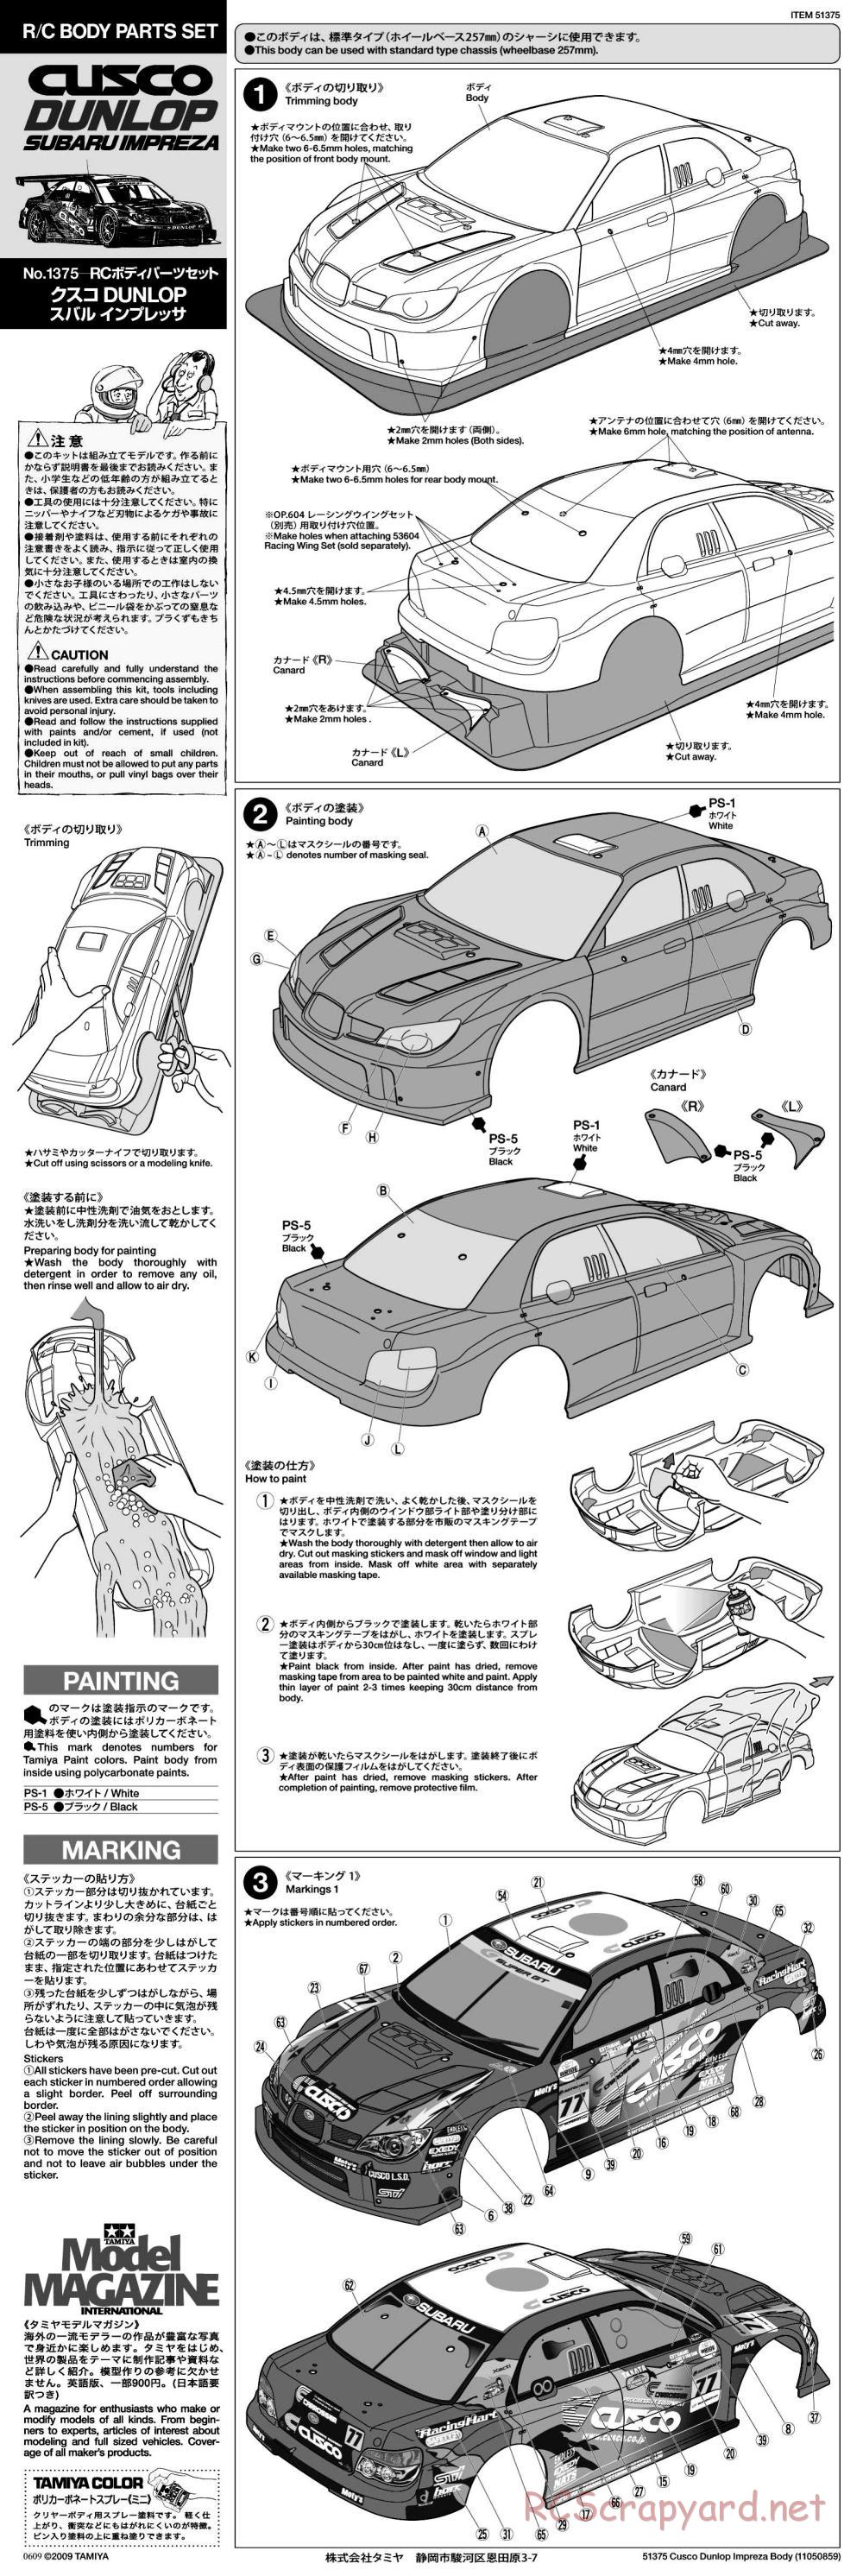 Tamiya - Cusco Dunlop Subaru Impreza - TA05 Ver.II Chassis - Body Manual - Page 1